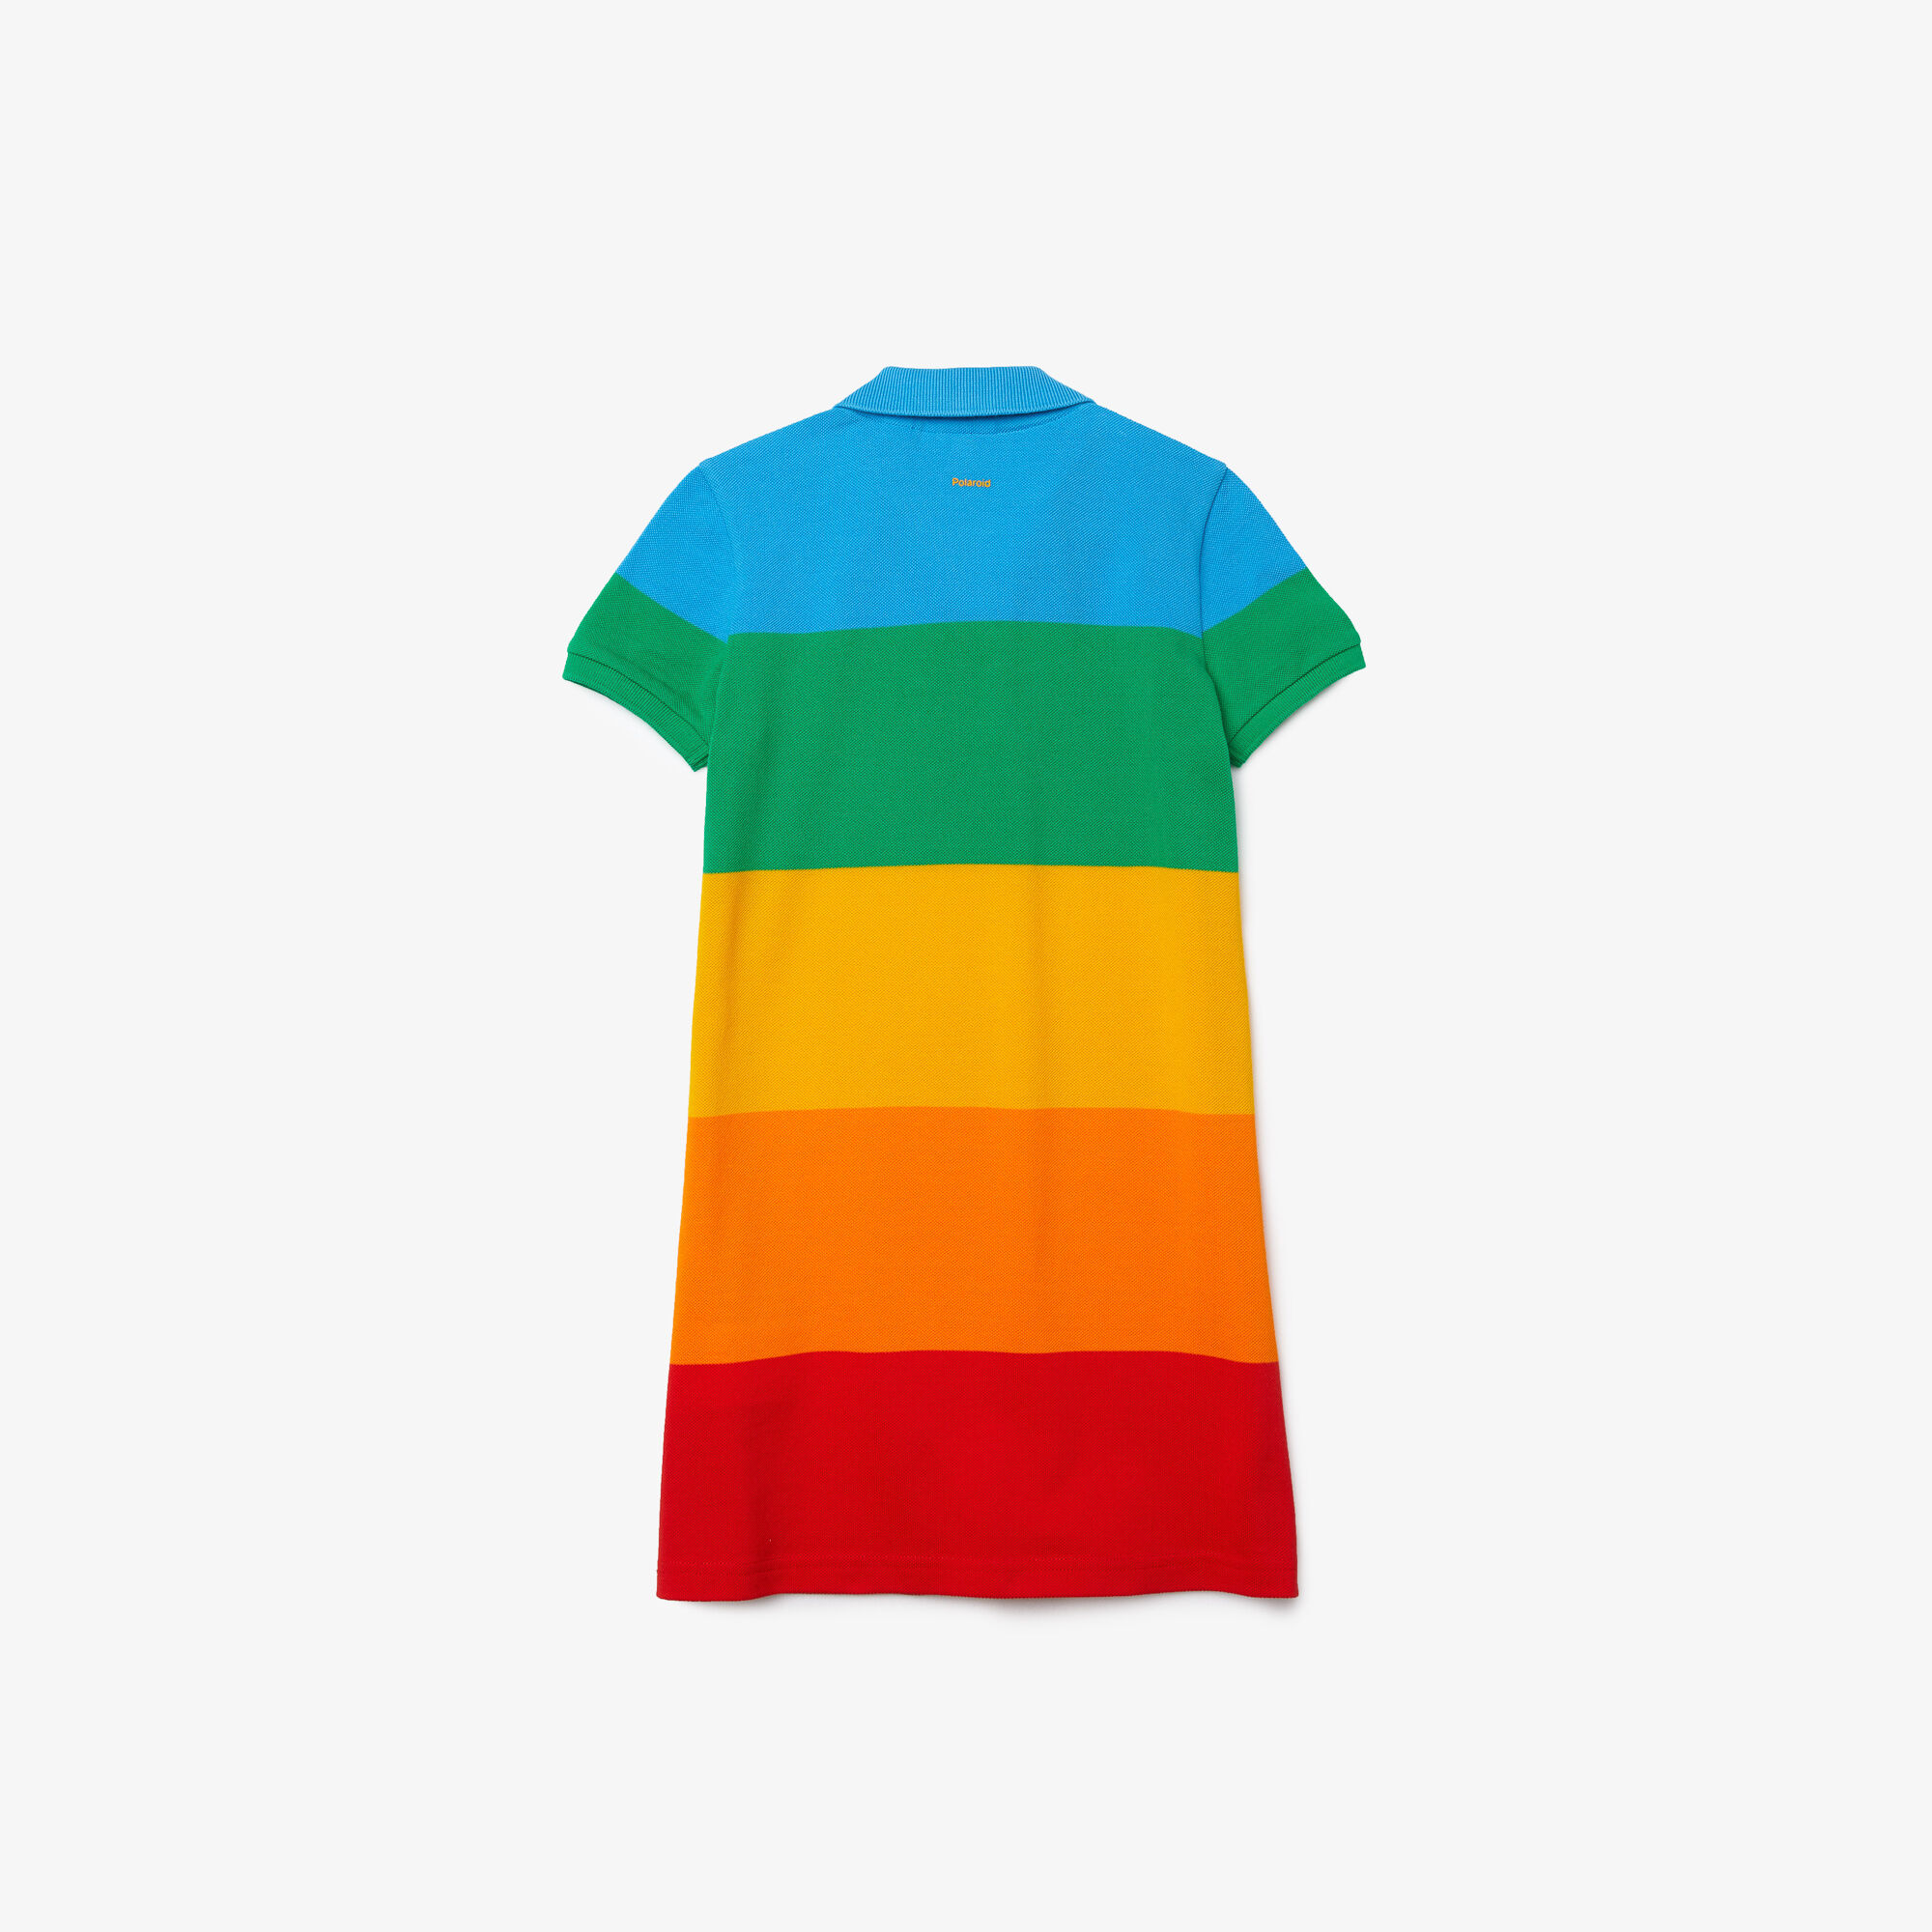 Girls’ Polaroid Collaboration Color Striped Cotton Polo Dress